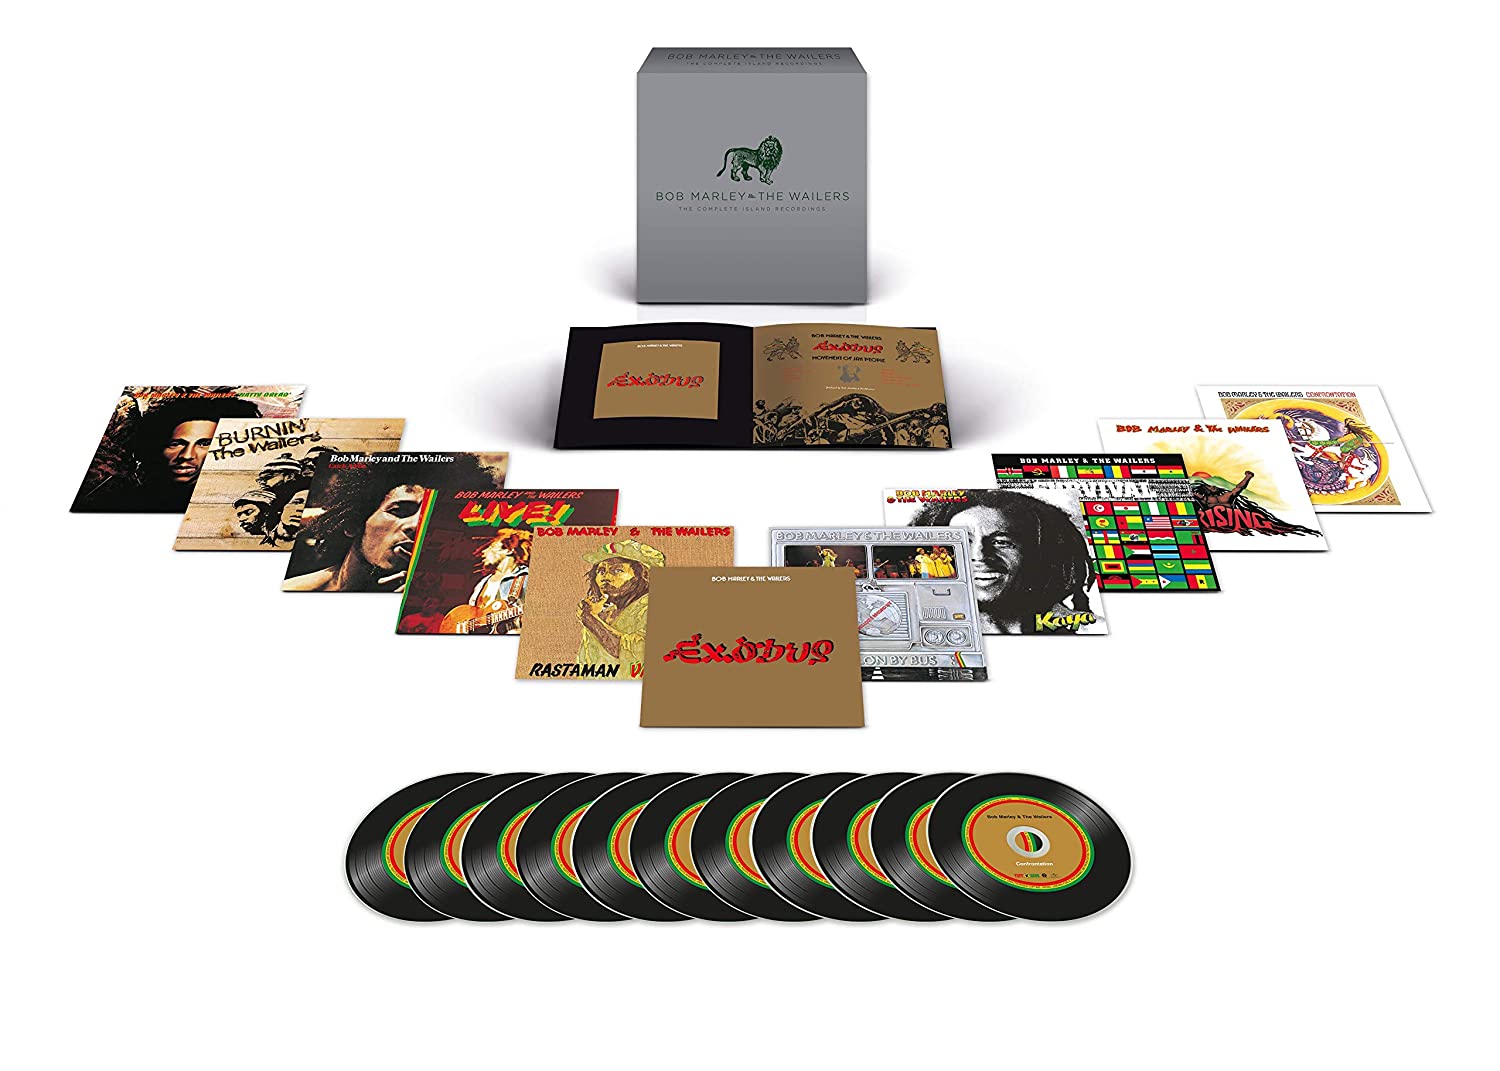 Bob Marley & The Wailers (밥 말리 & 더 웨일러스) - The Complete Island Recordings  